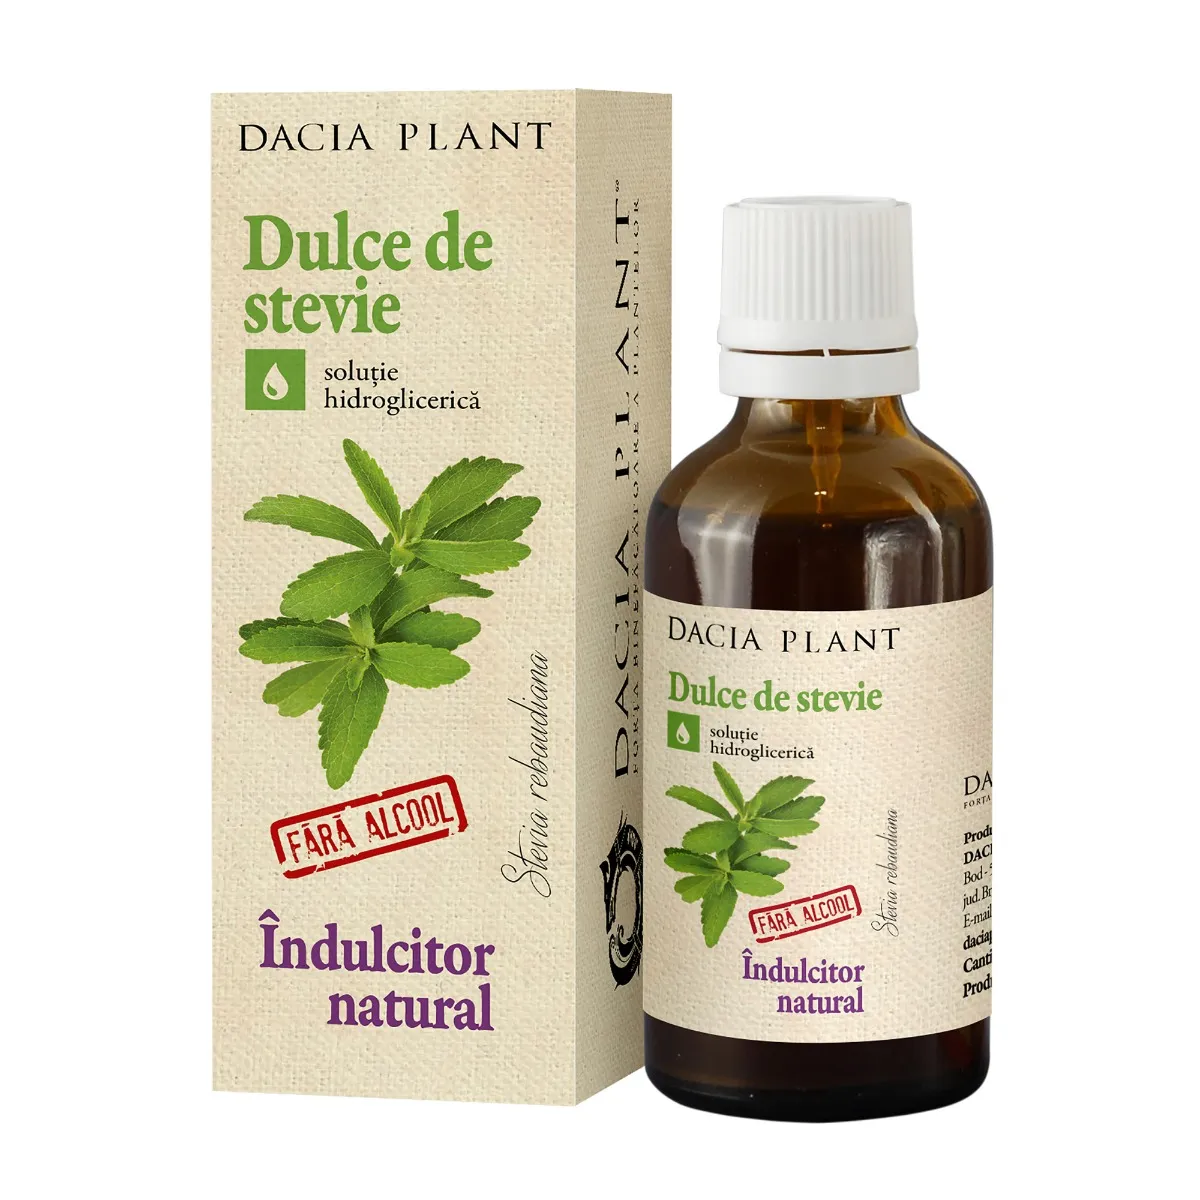 Dulce de stevie, 50 ml, Dacia Plant